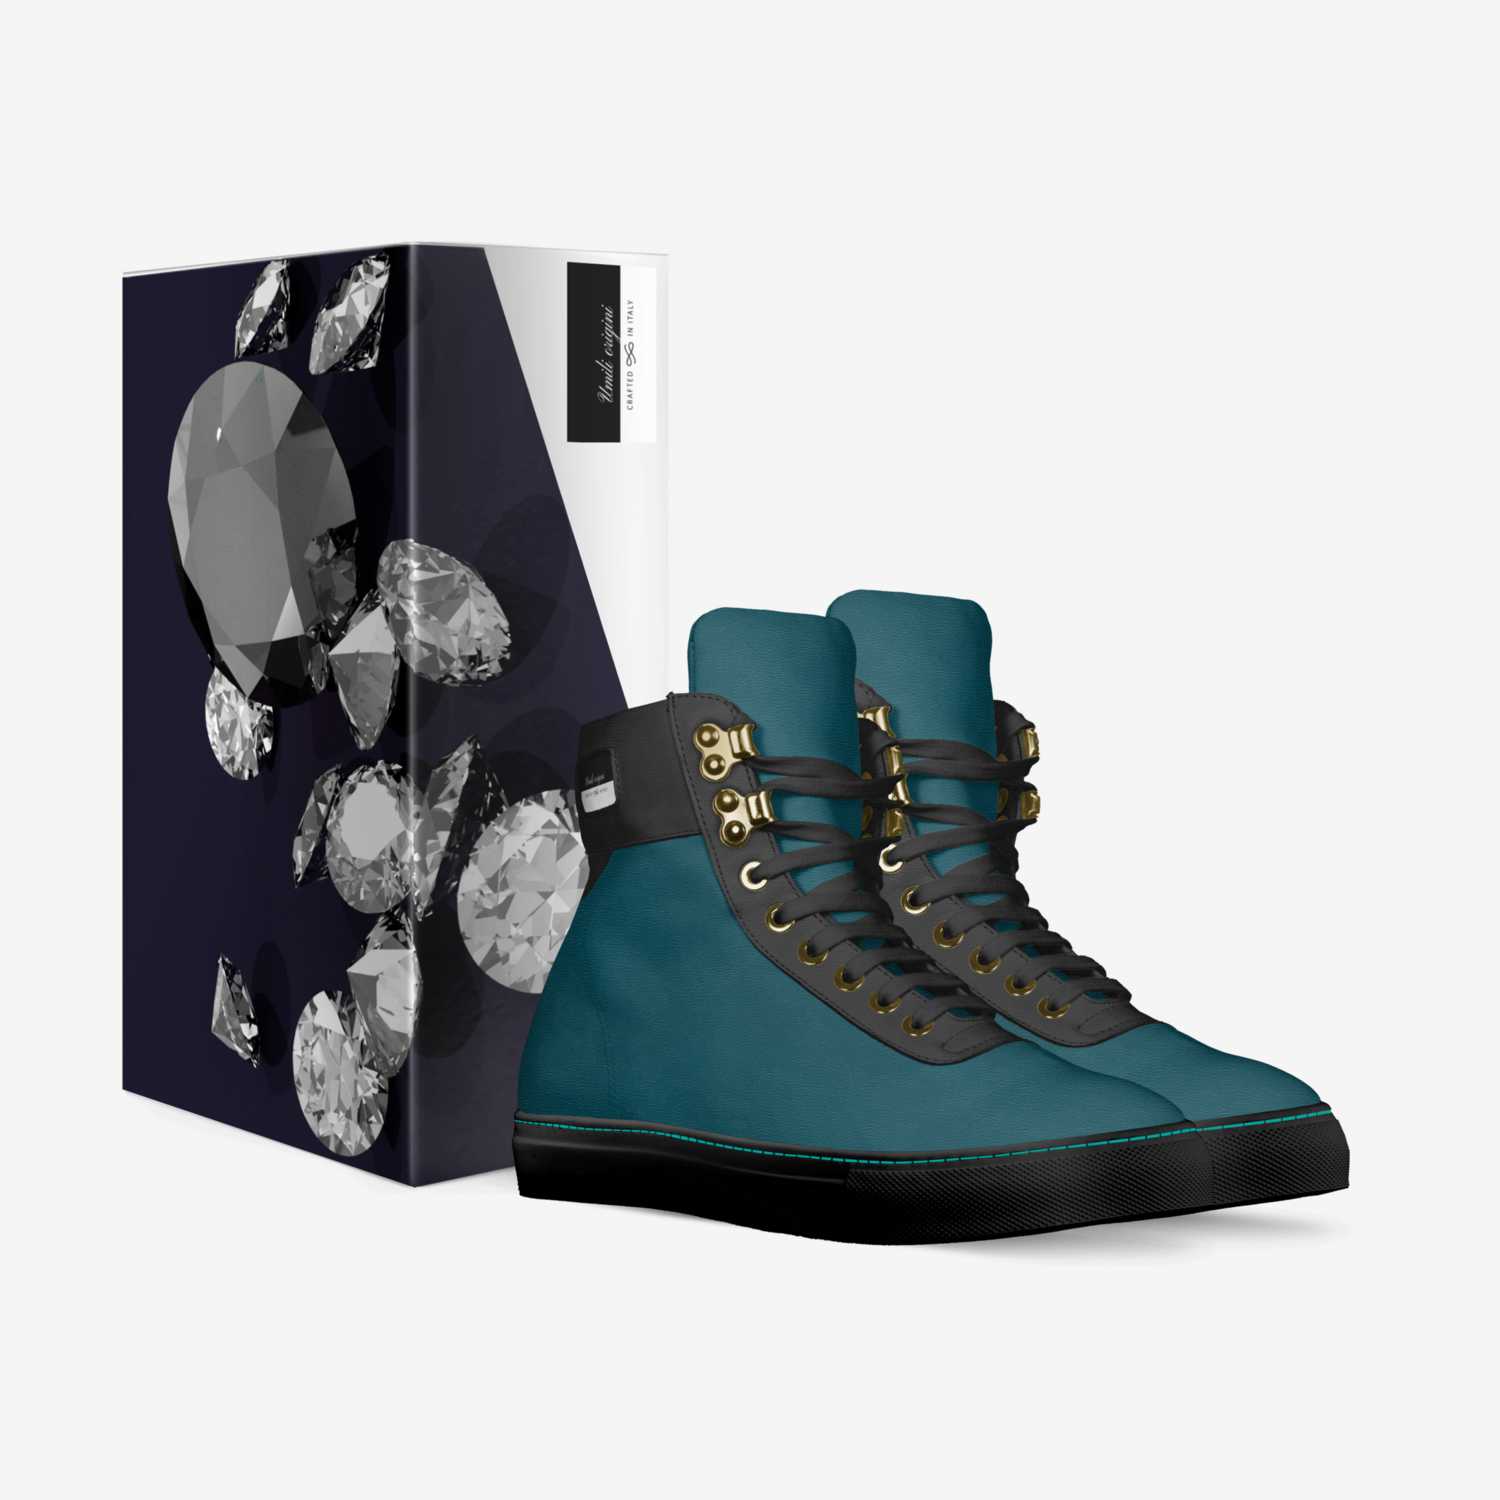 Umili origini custom made in Italy shoes by Josh Golack | Box view